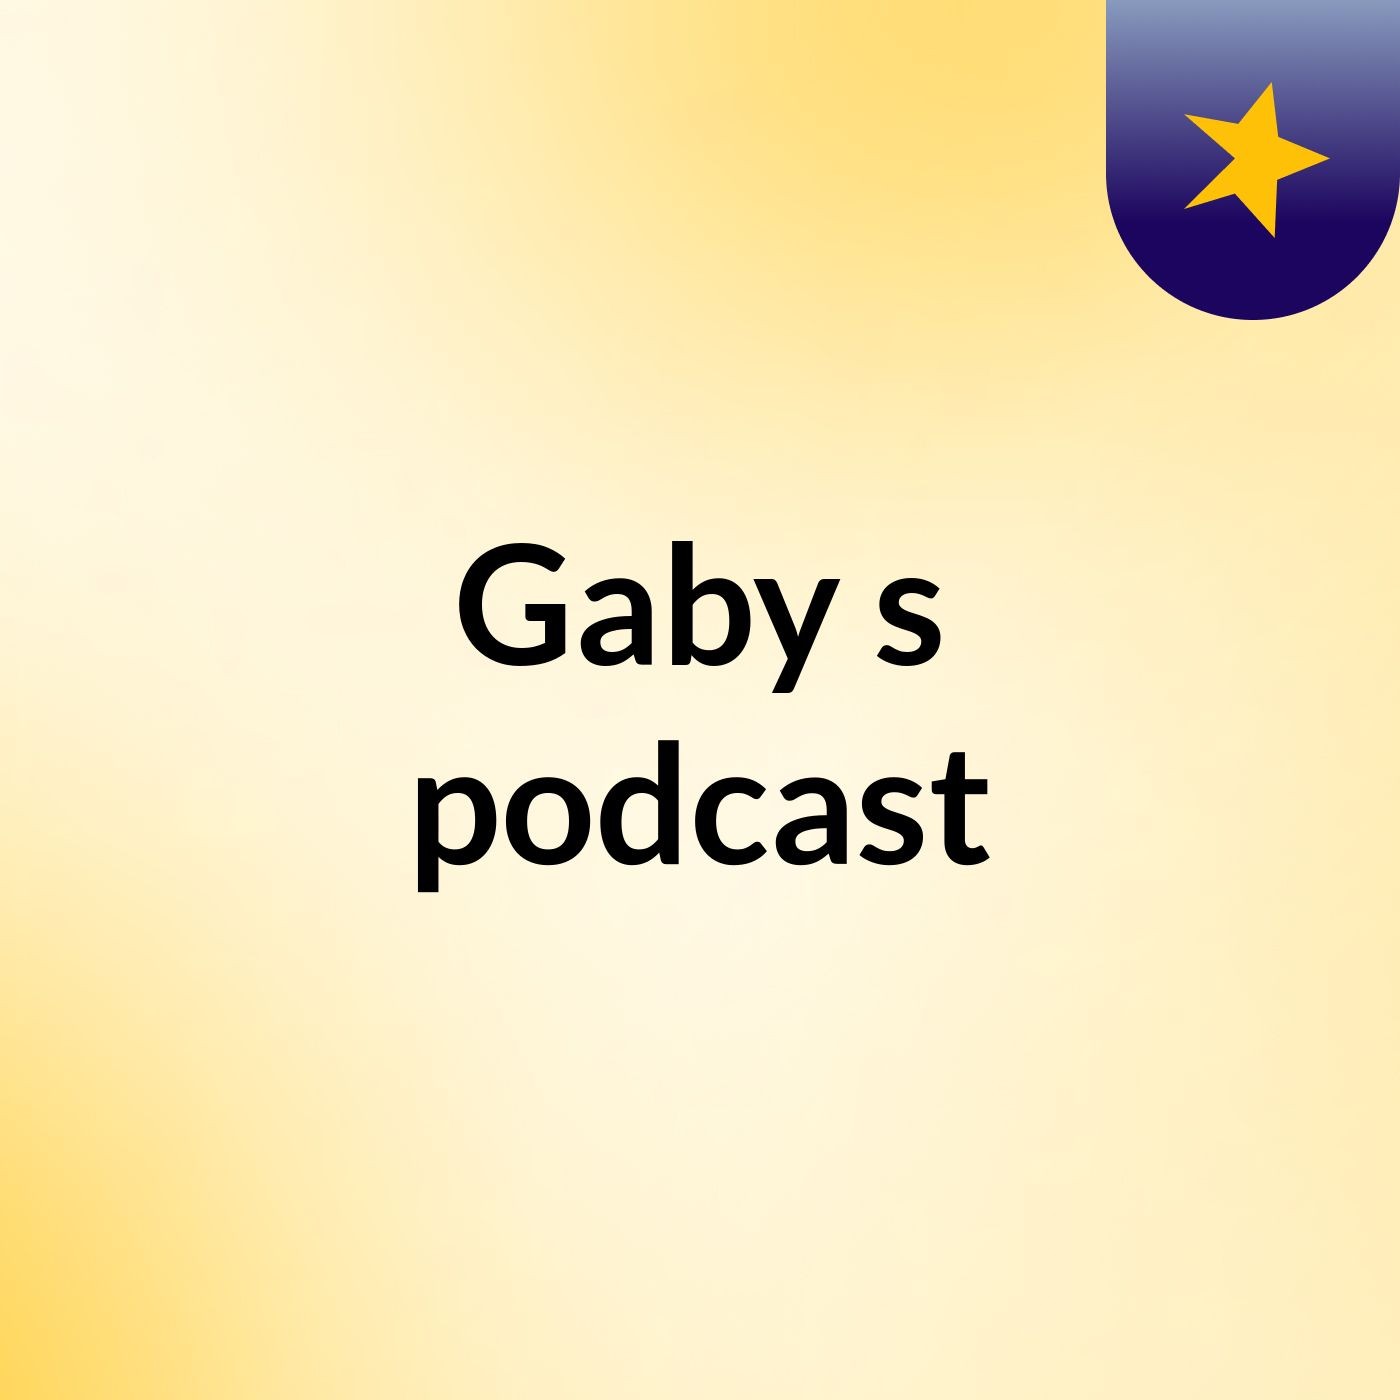 Gaby's podcast